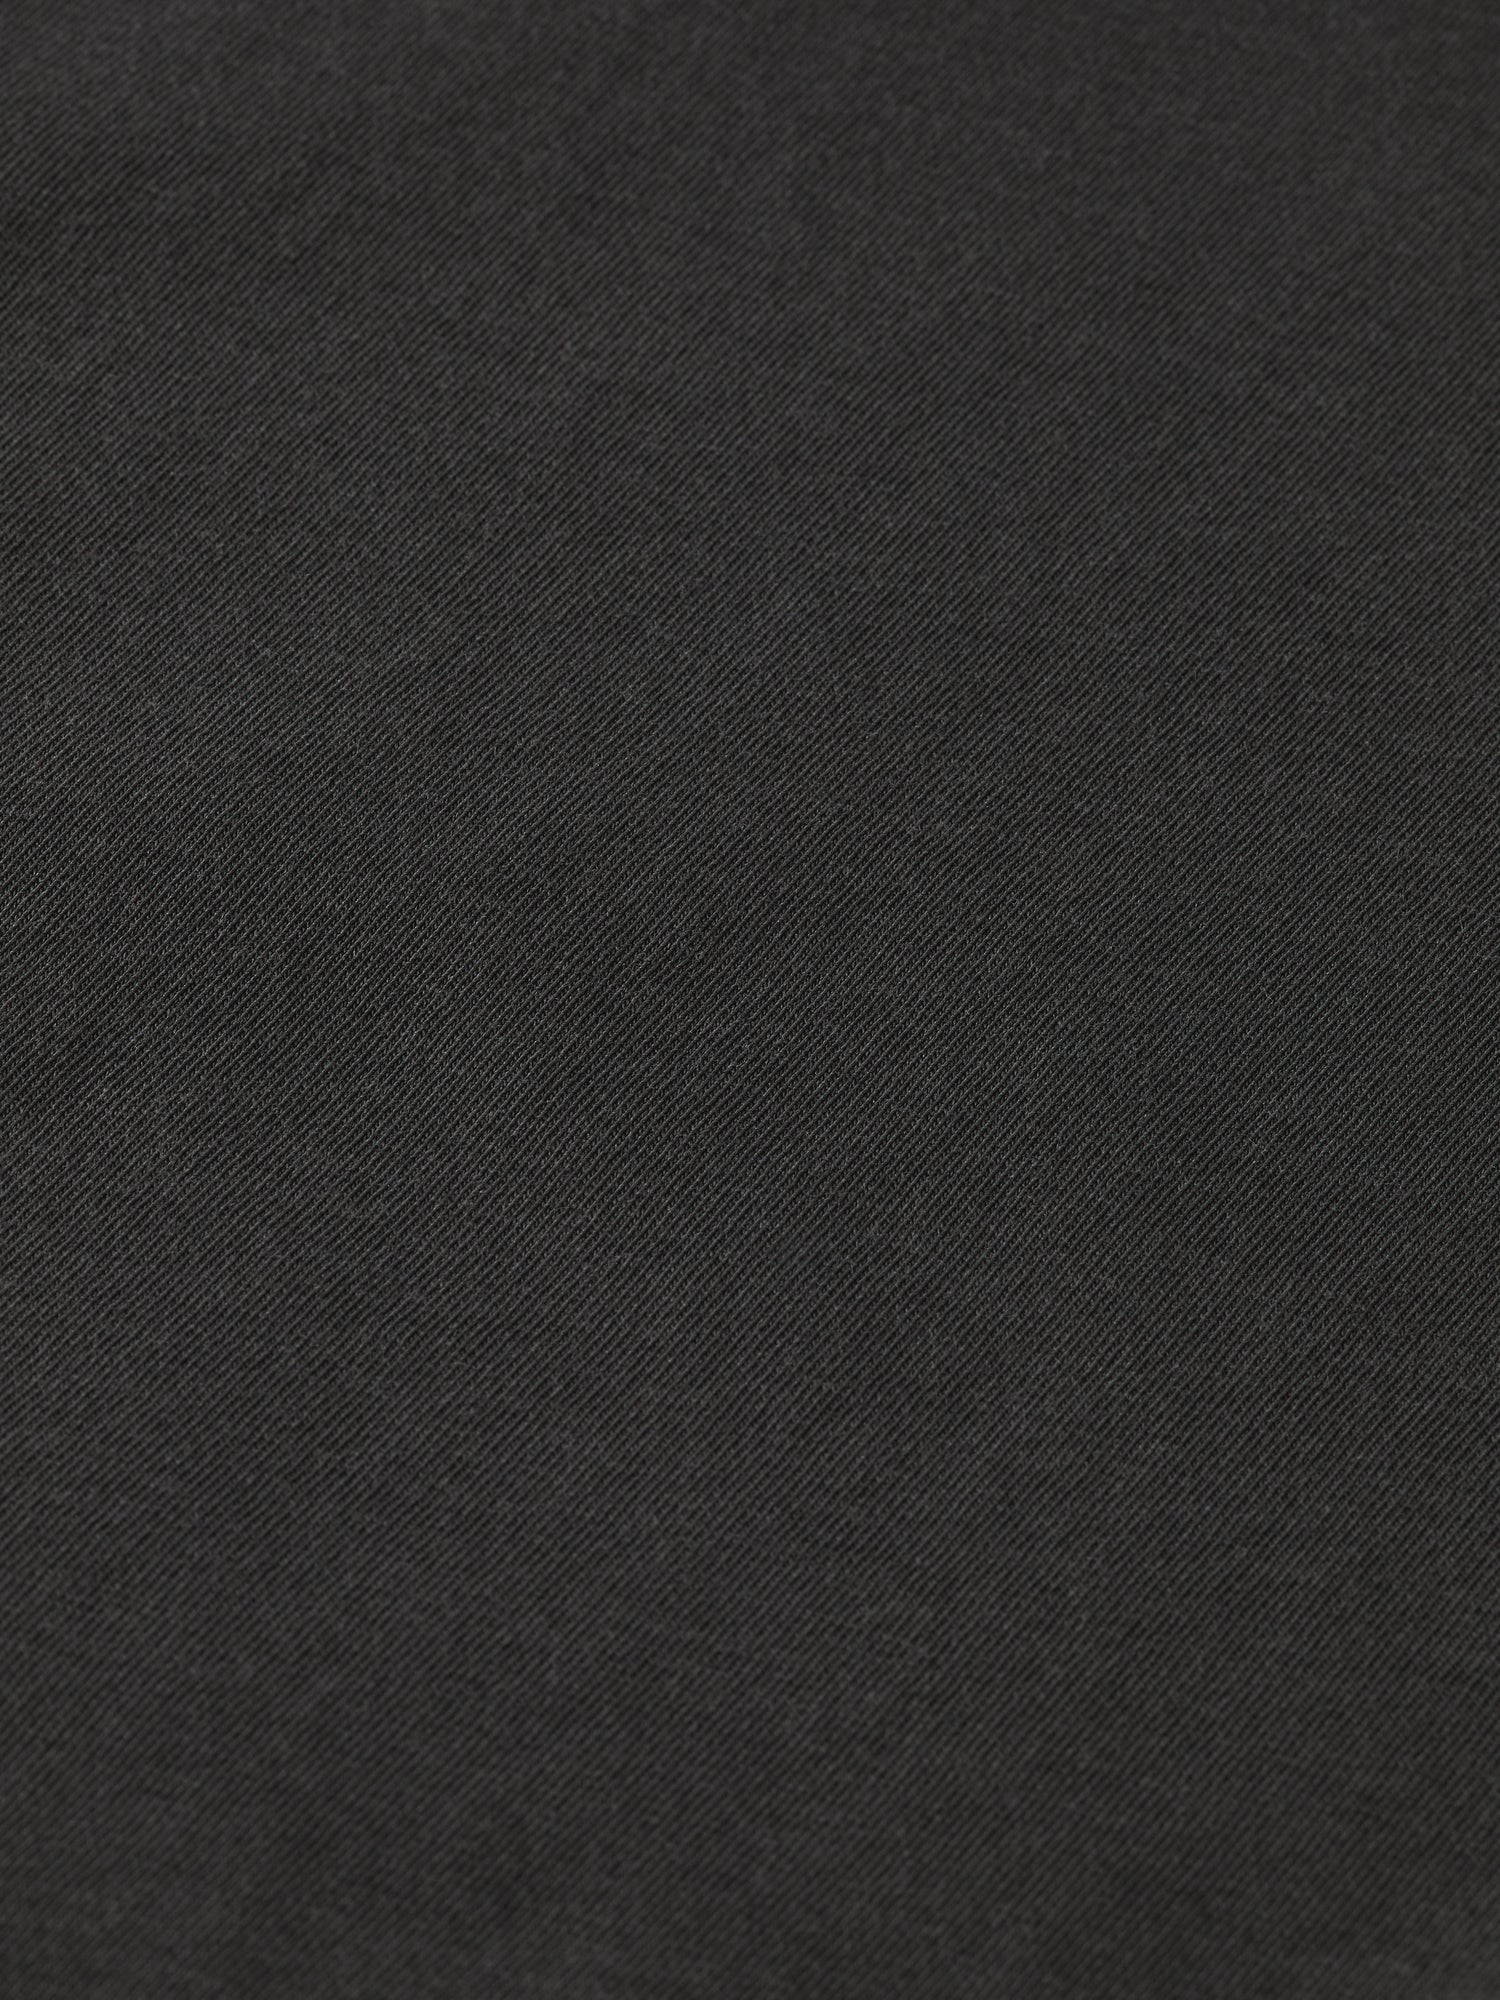 Raw edge t-shirt - Black